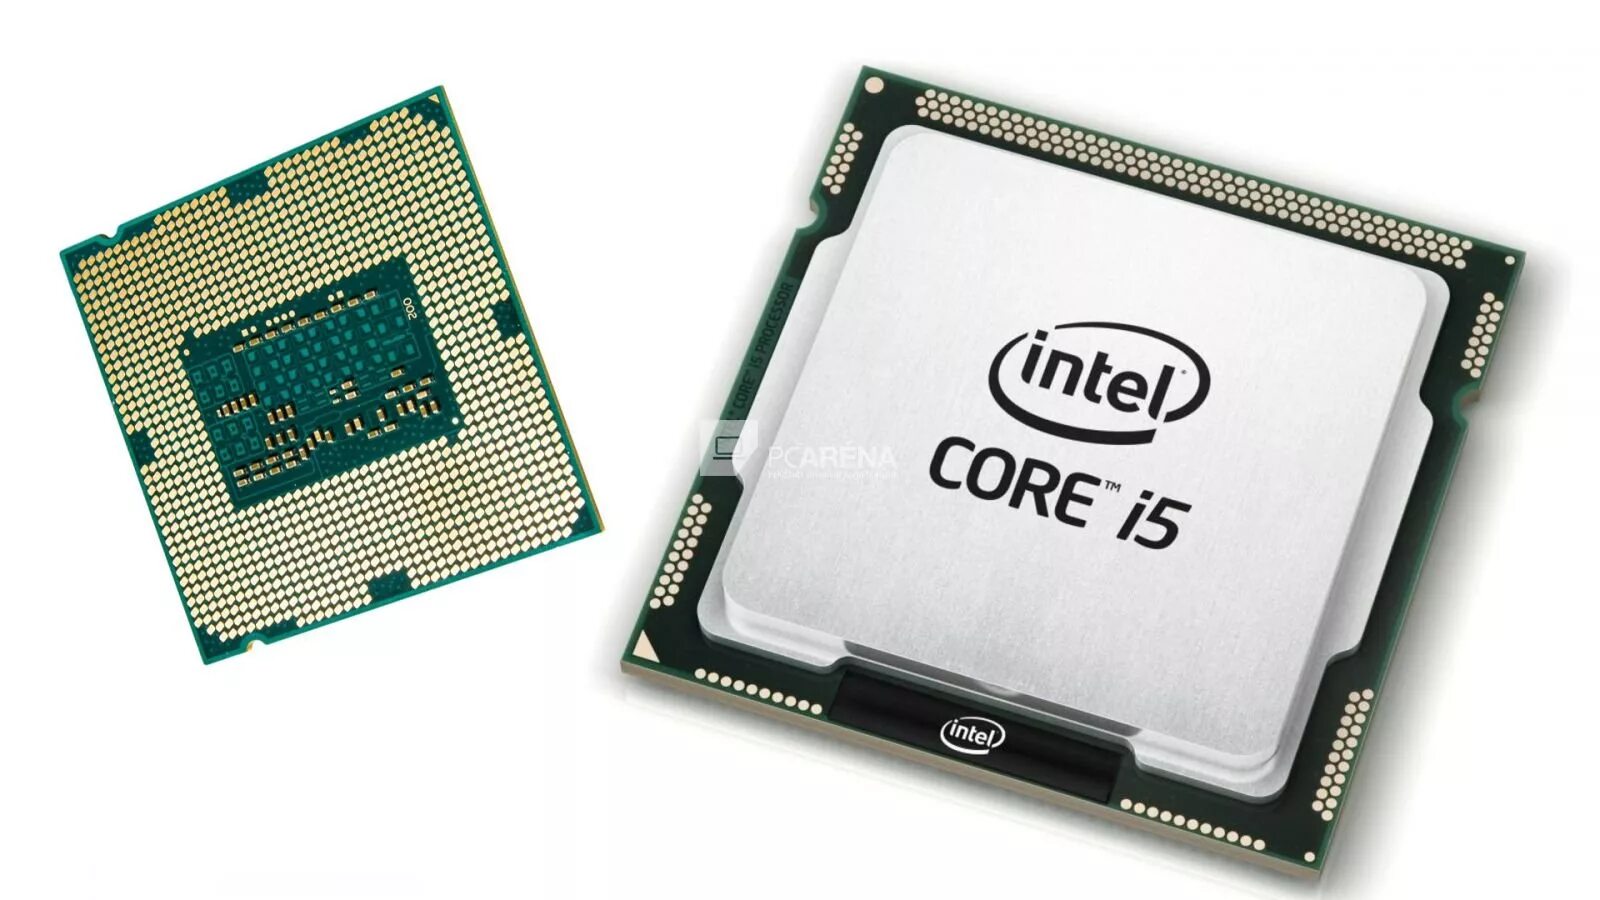 Inter i5. Процессор Intel Core i5 2400. Процессор Intel Core i5 inside. Intel Core i5 2400 сокет. Процессор Intel Core i5 5500.